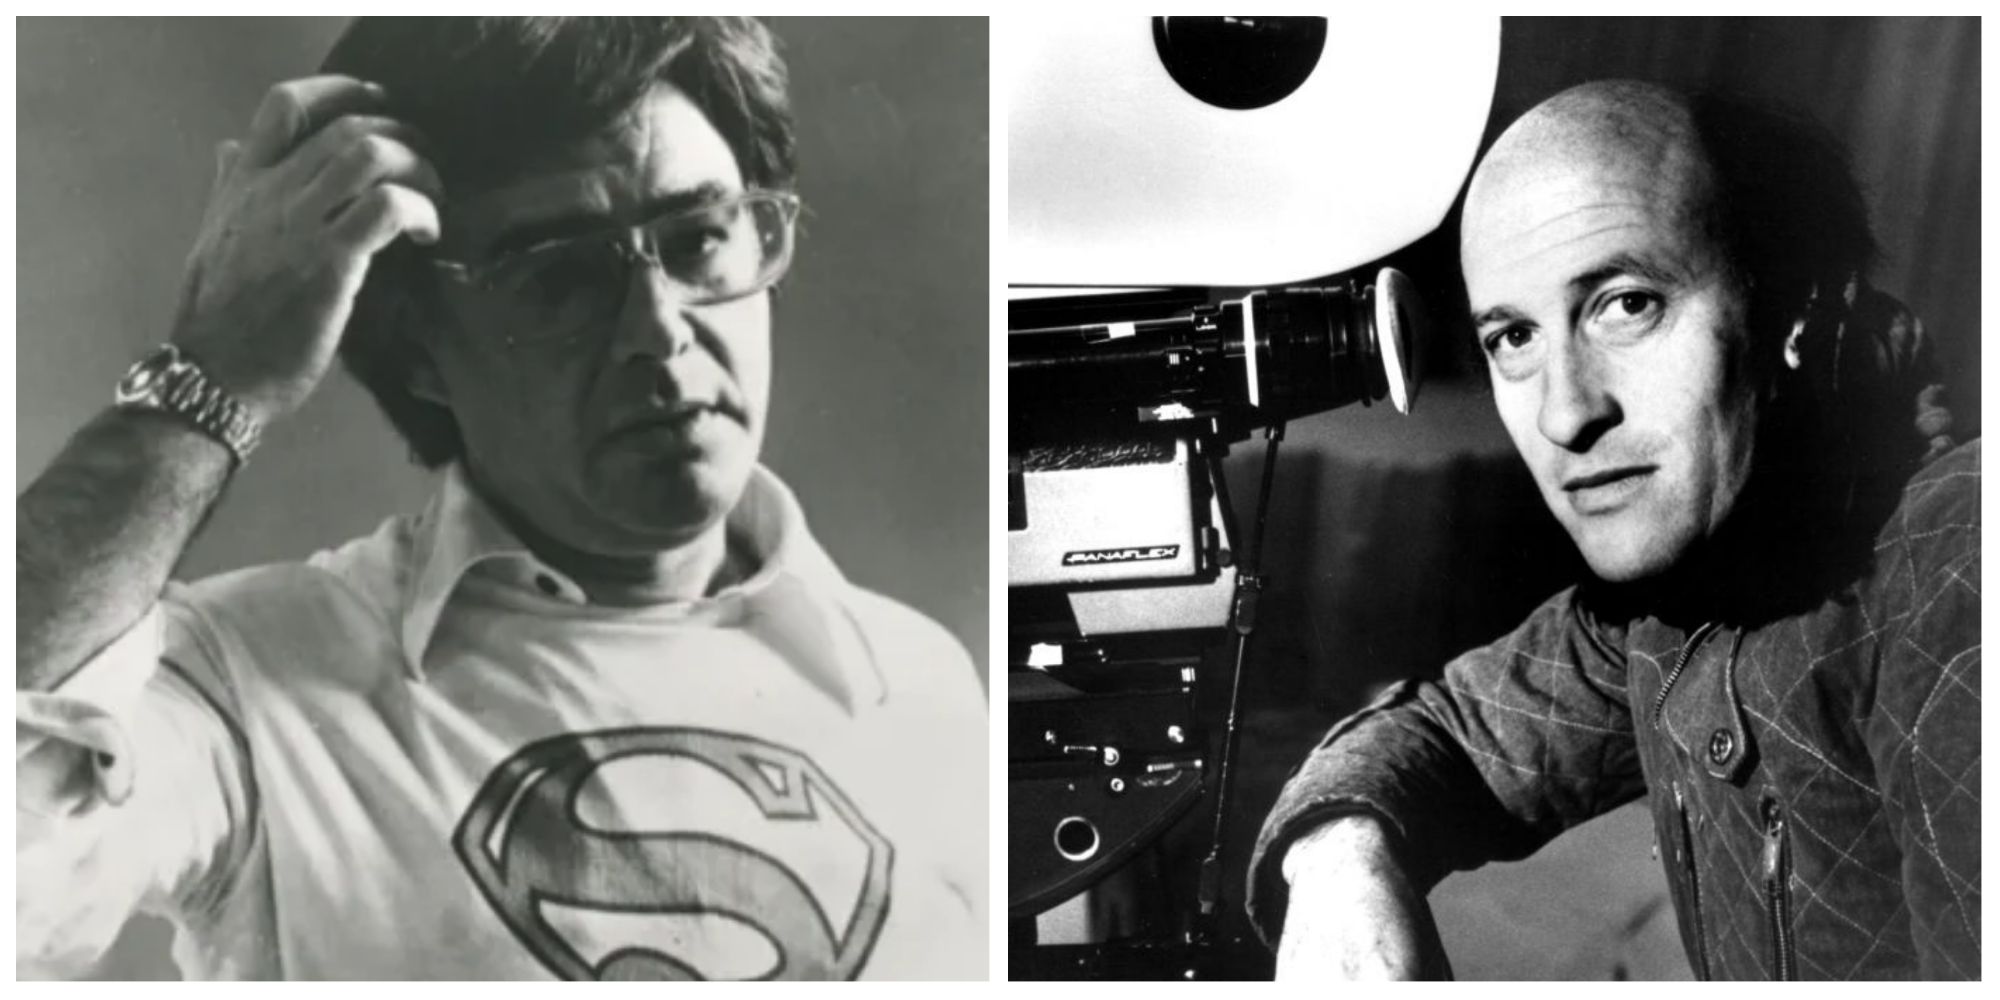 Directors Richard Donner and Richard Lester of Superman (1978) and Superman II